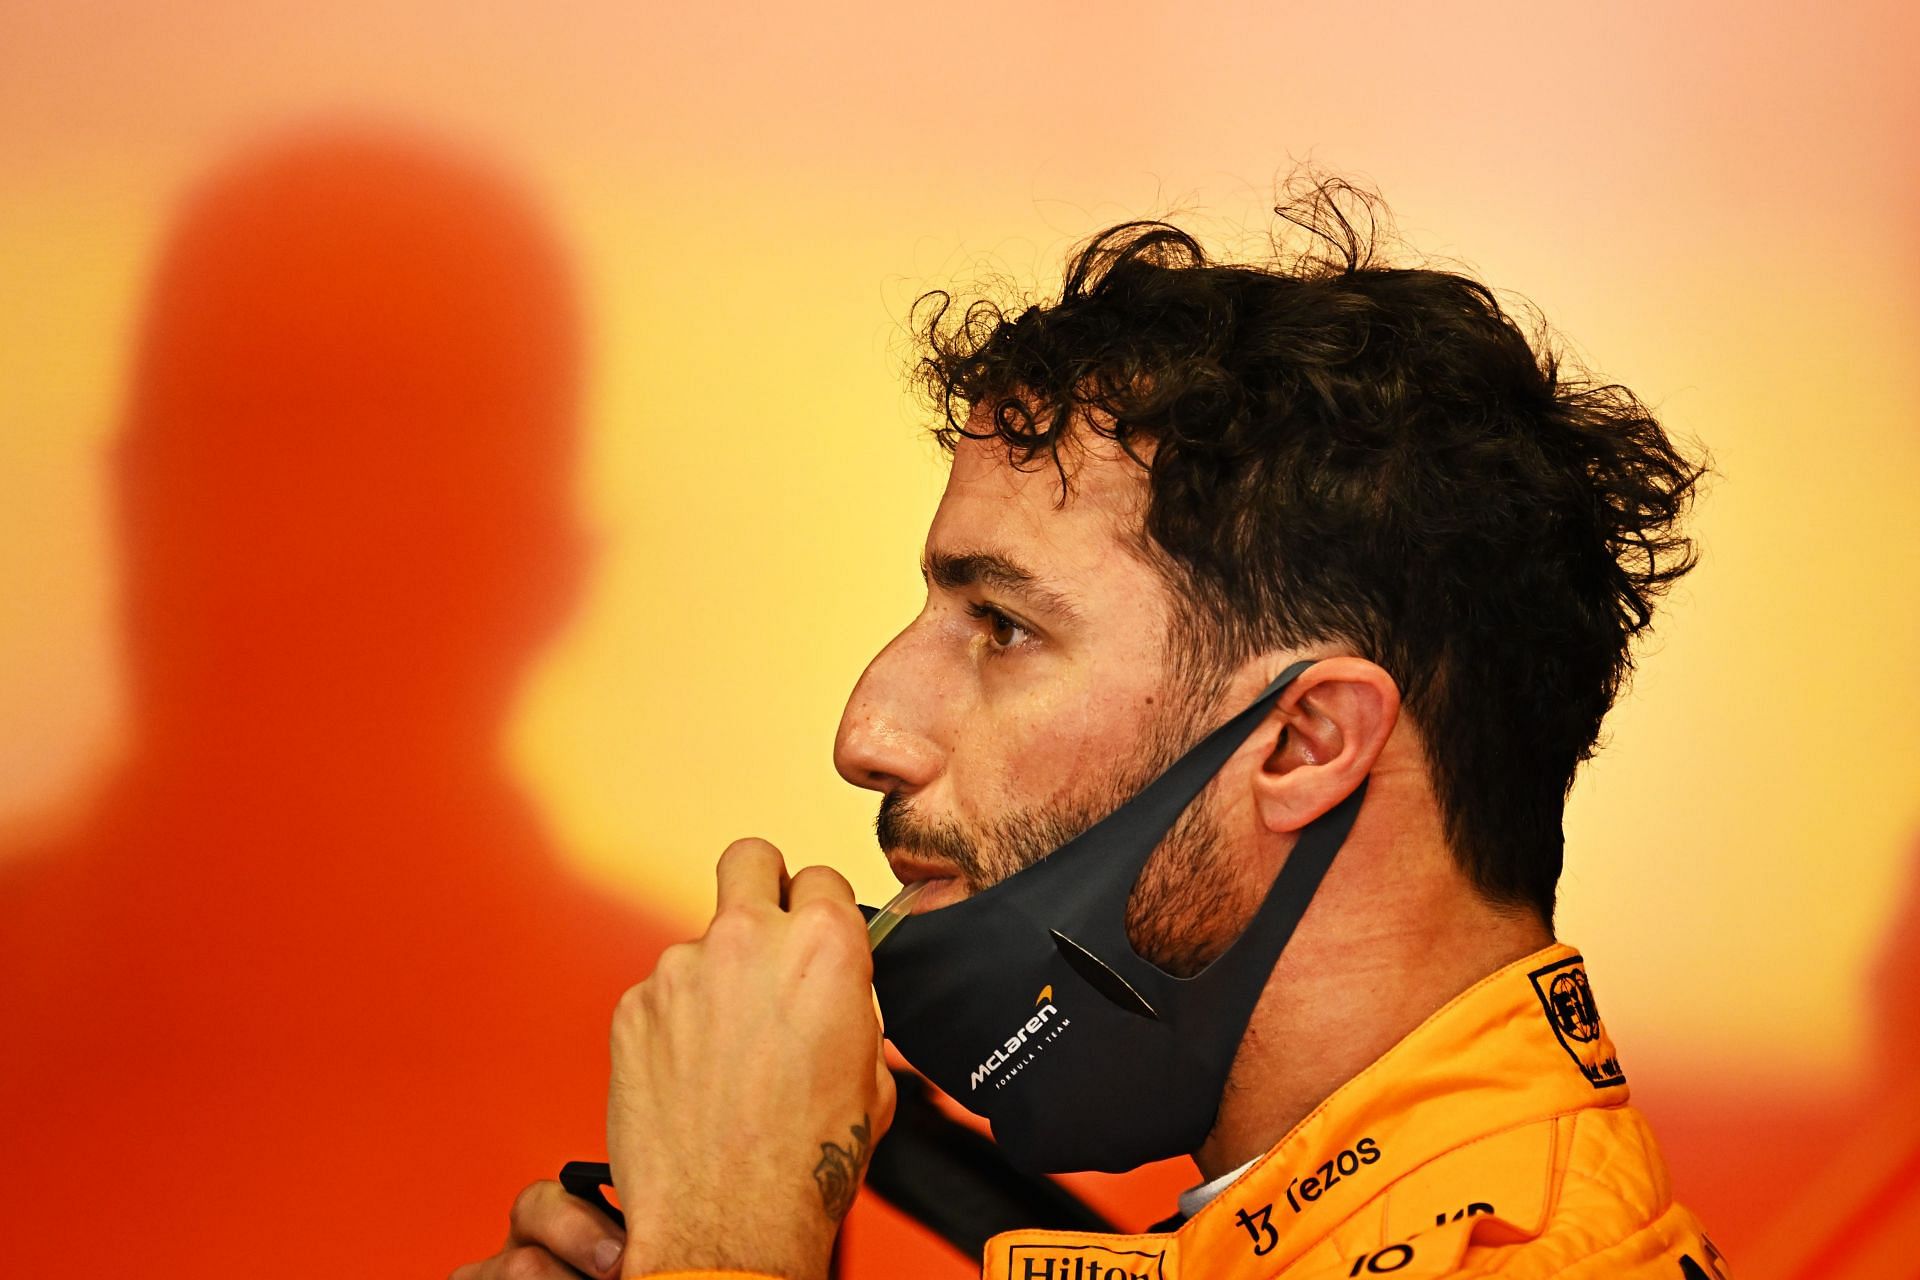 F1 Grand Prix of Spain - Final Practice - Daniel Ricciardo goes through a rough patch.